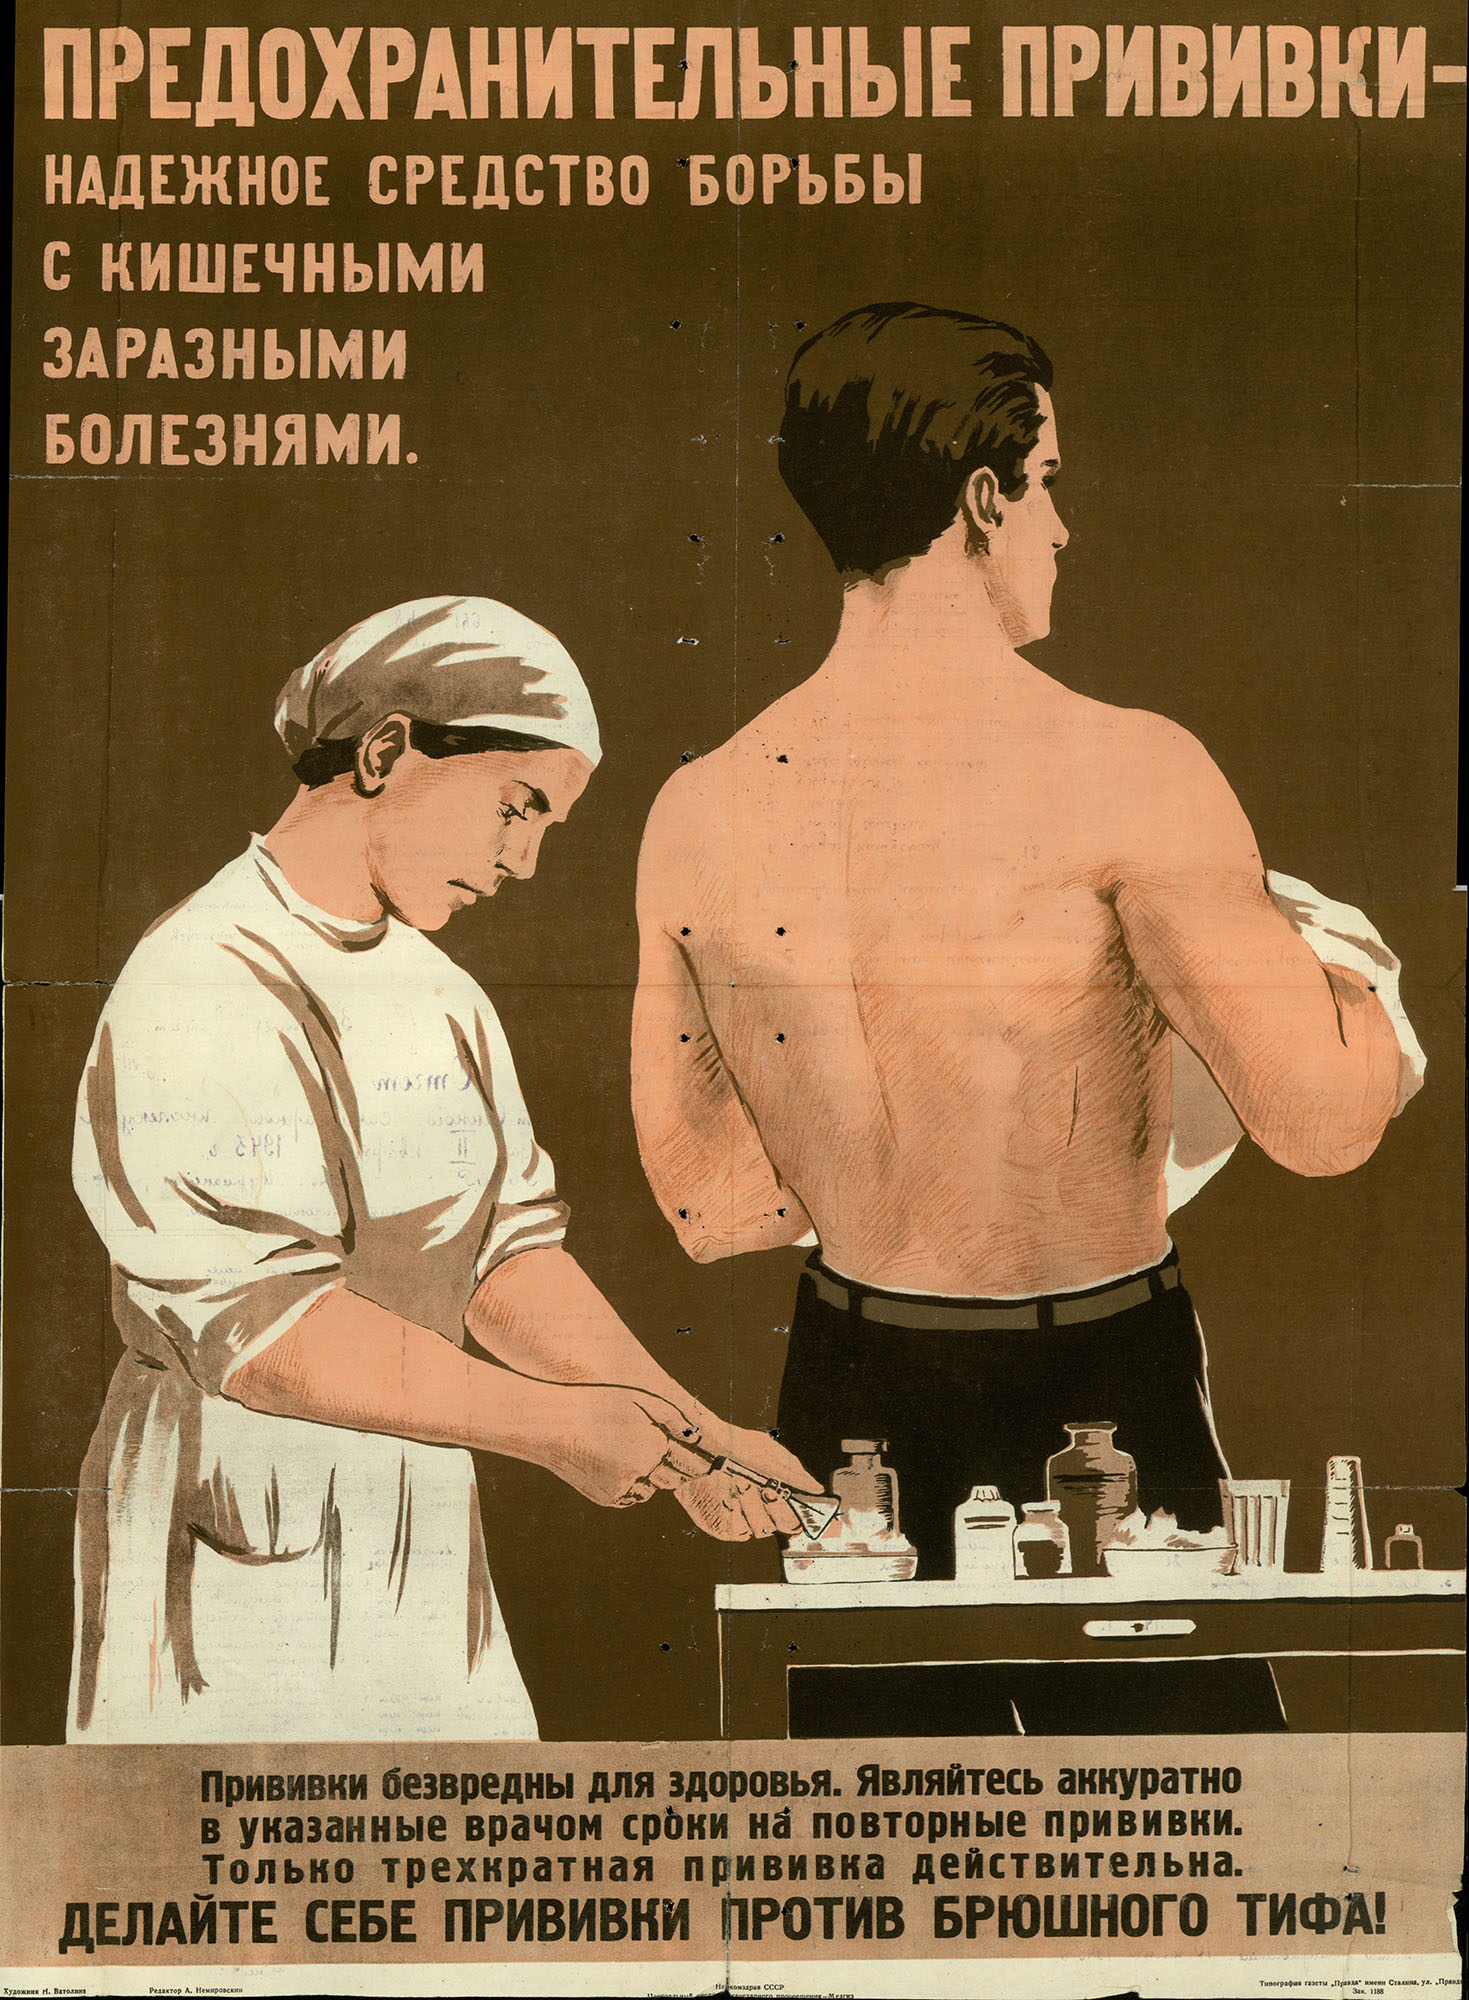 История болезни плакат